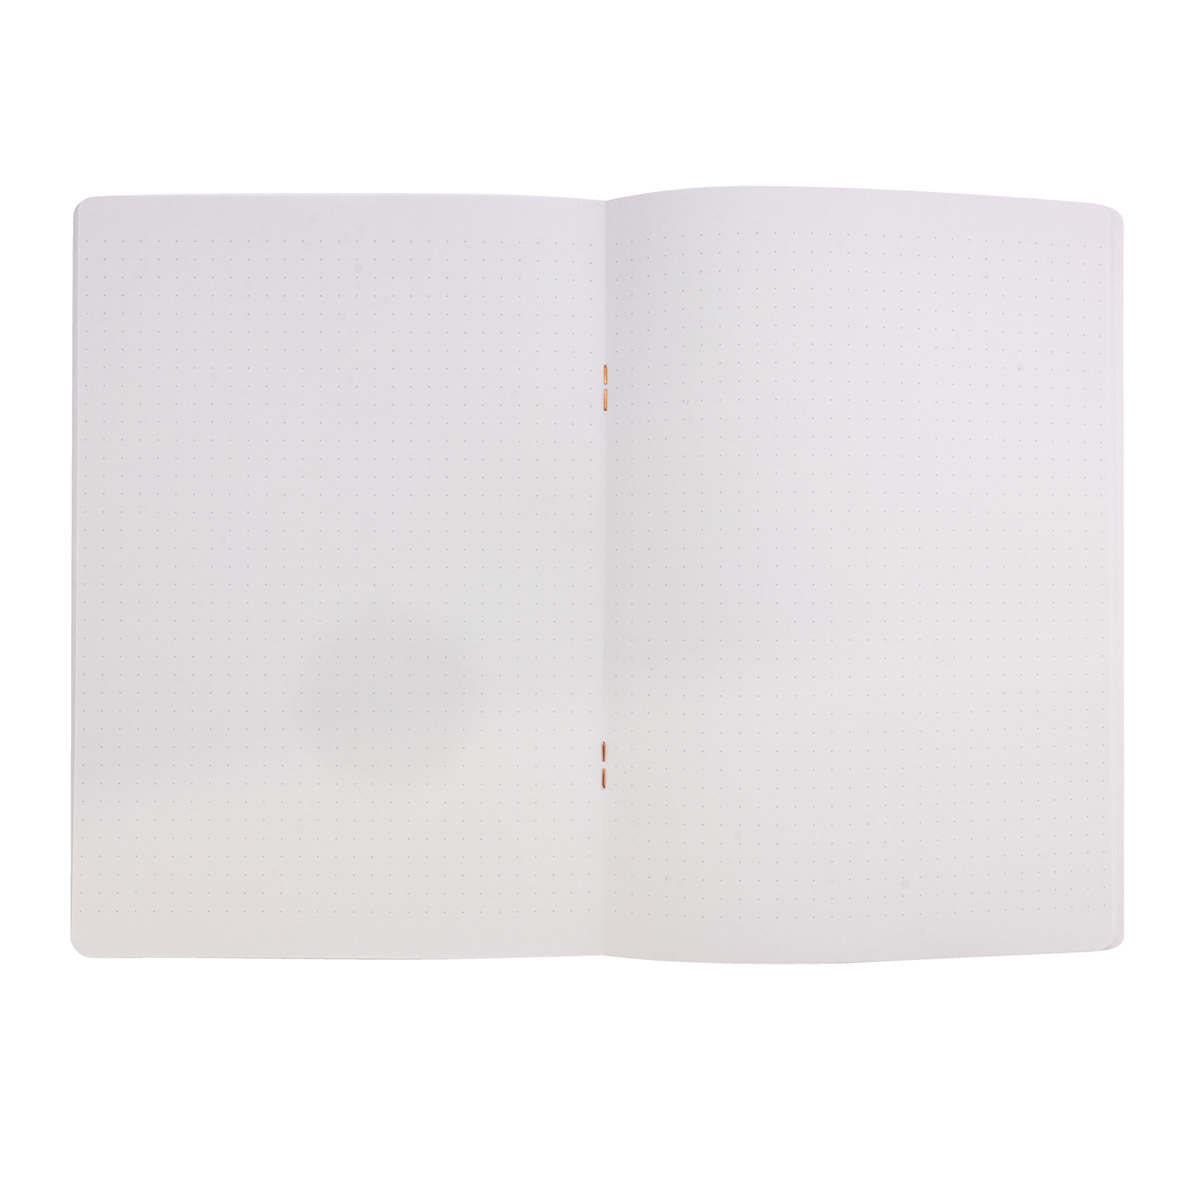 Midori A5 Dot Grid Notebook - Purple